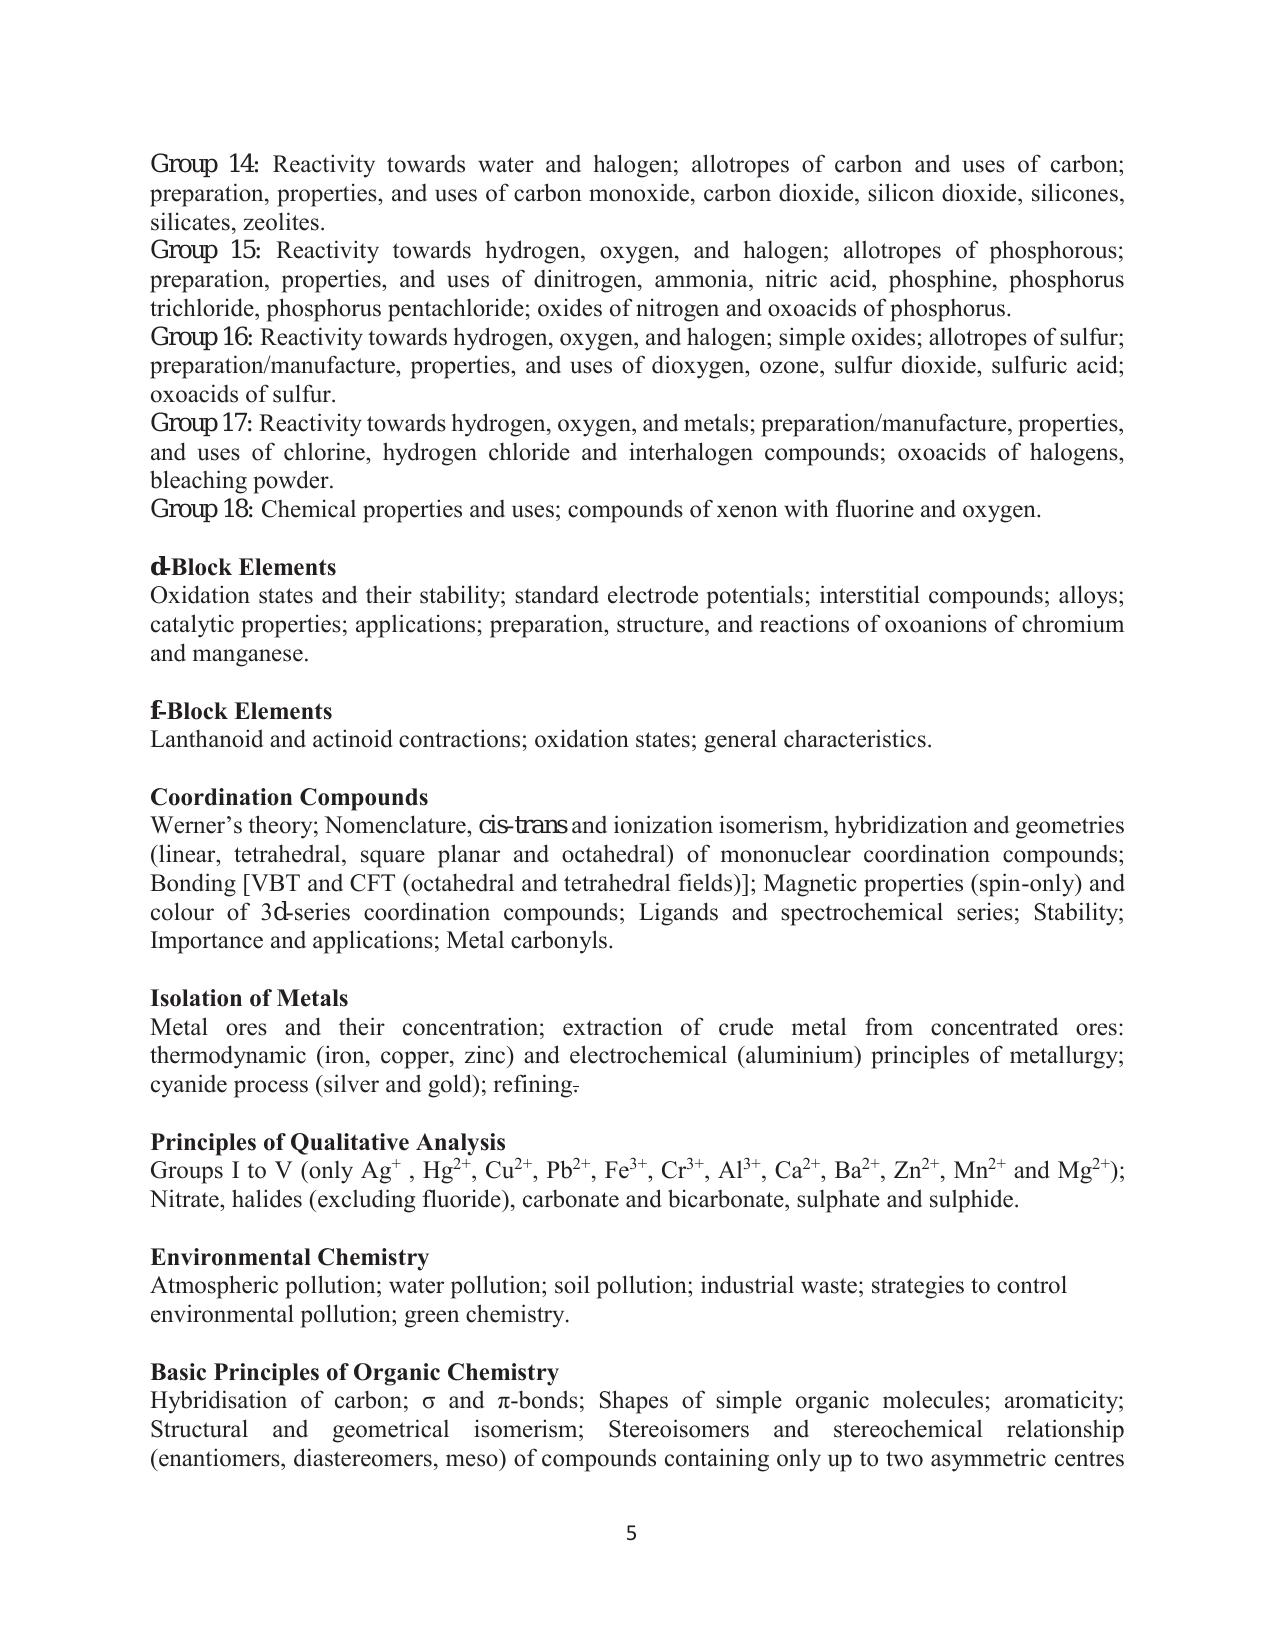 JEE Advanced Syllabus - Page 5